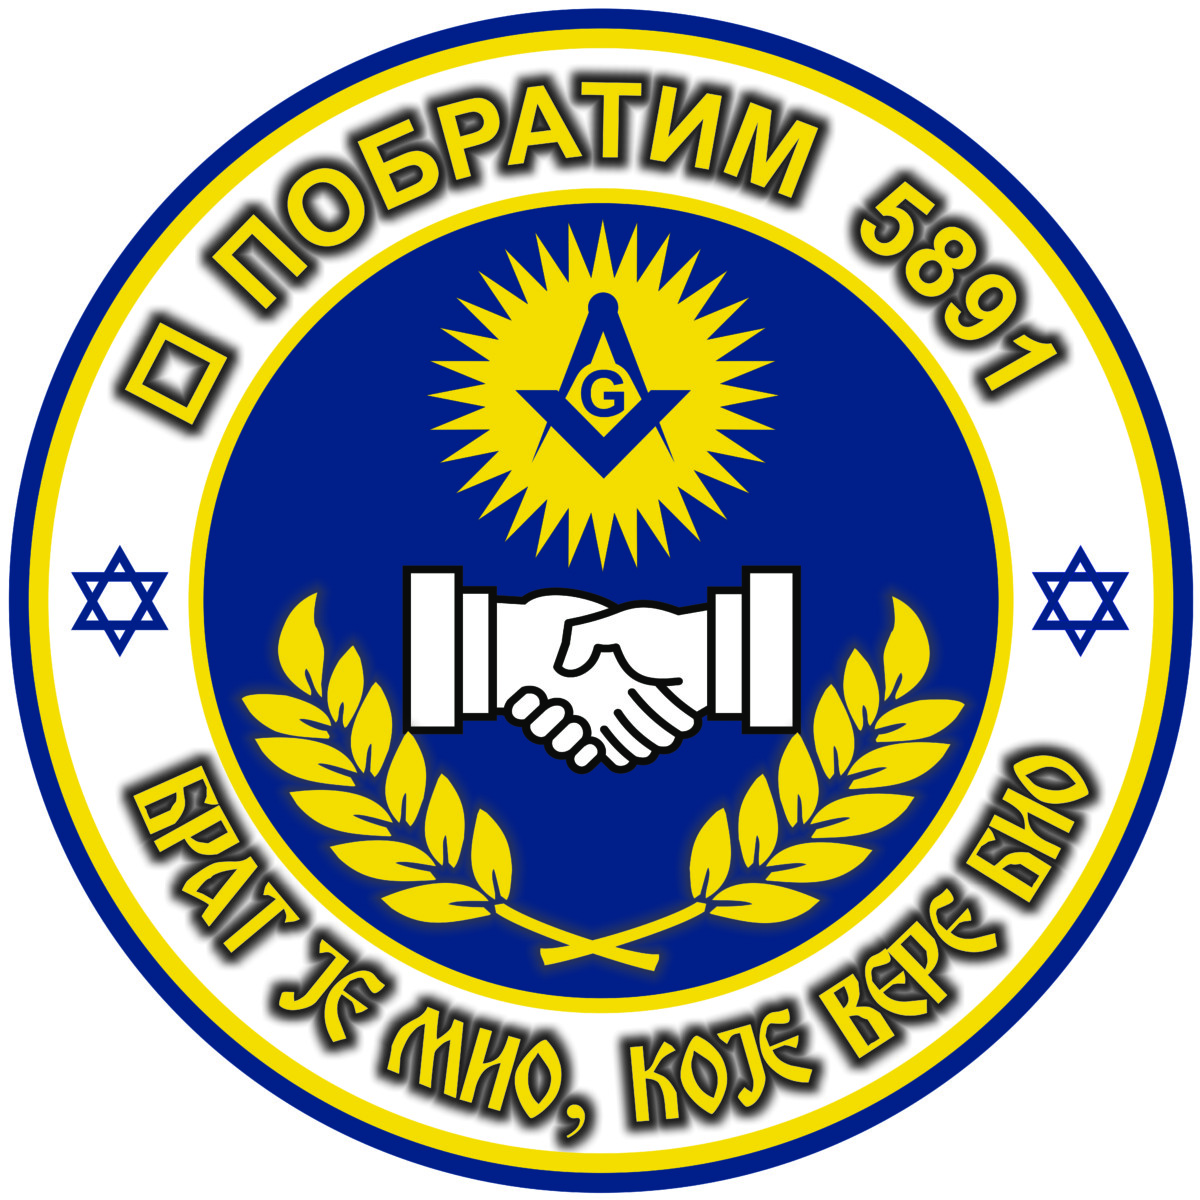 01-PL-Pobratim_logo  